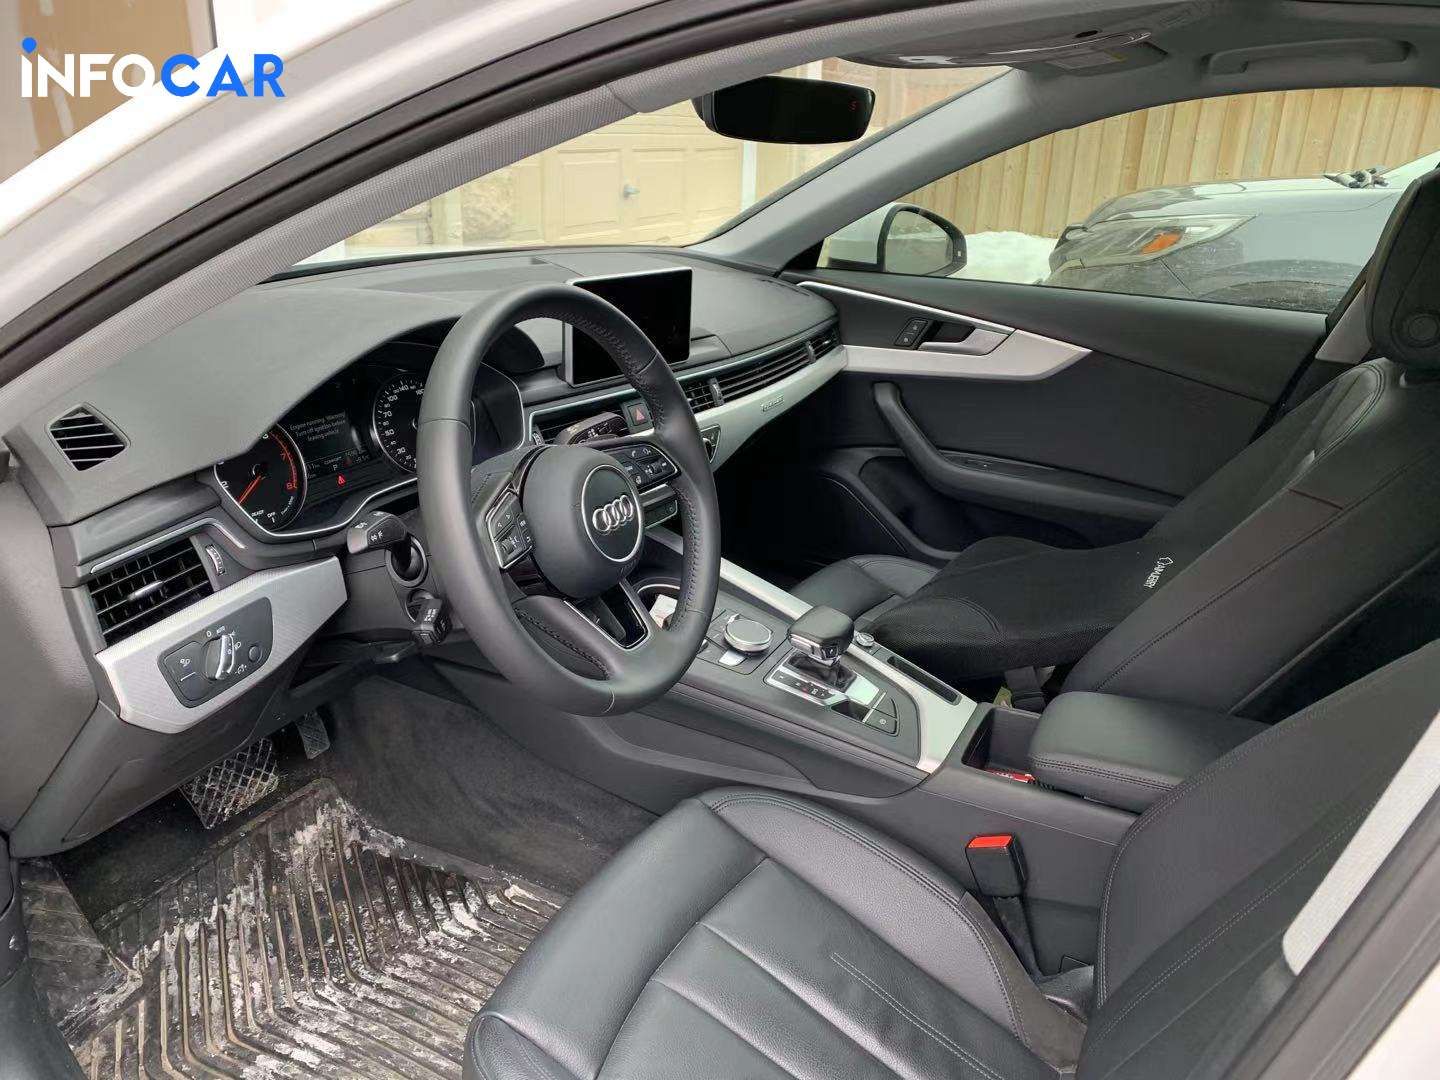 2019 Audi A4 progreesive - INFOCAR - Toronto Auto Trading Platform